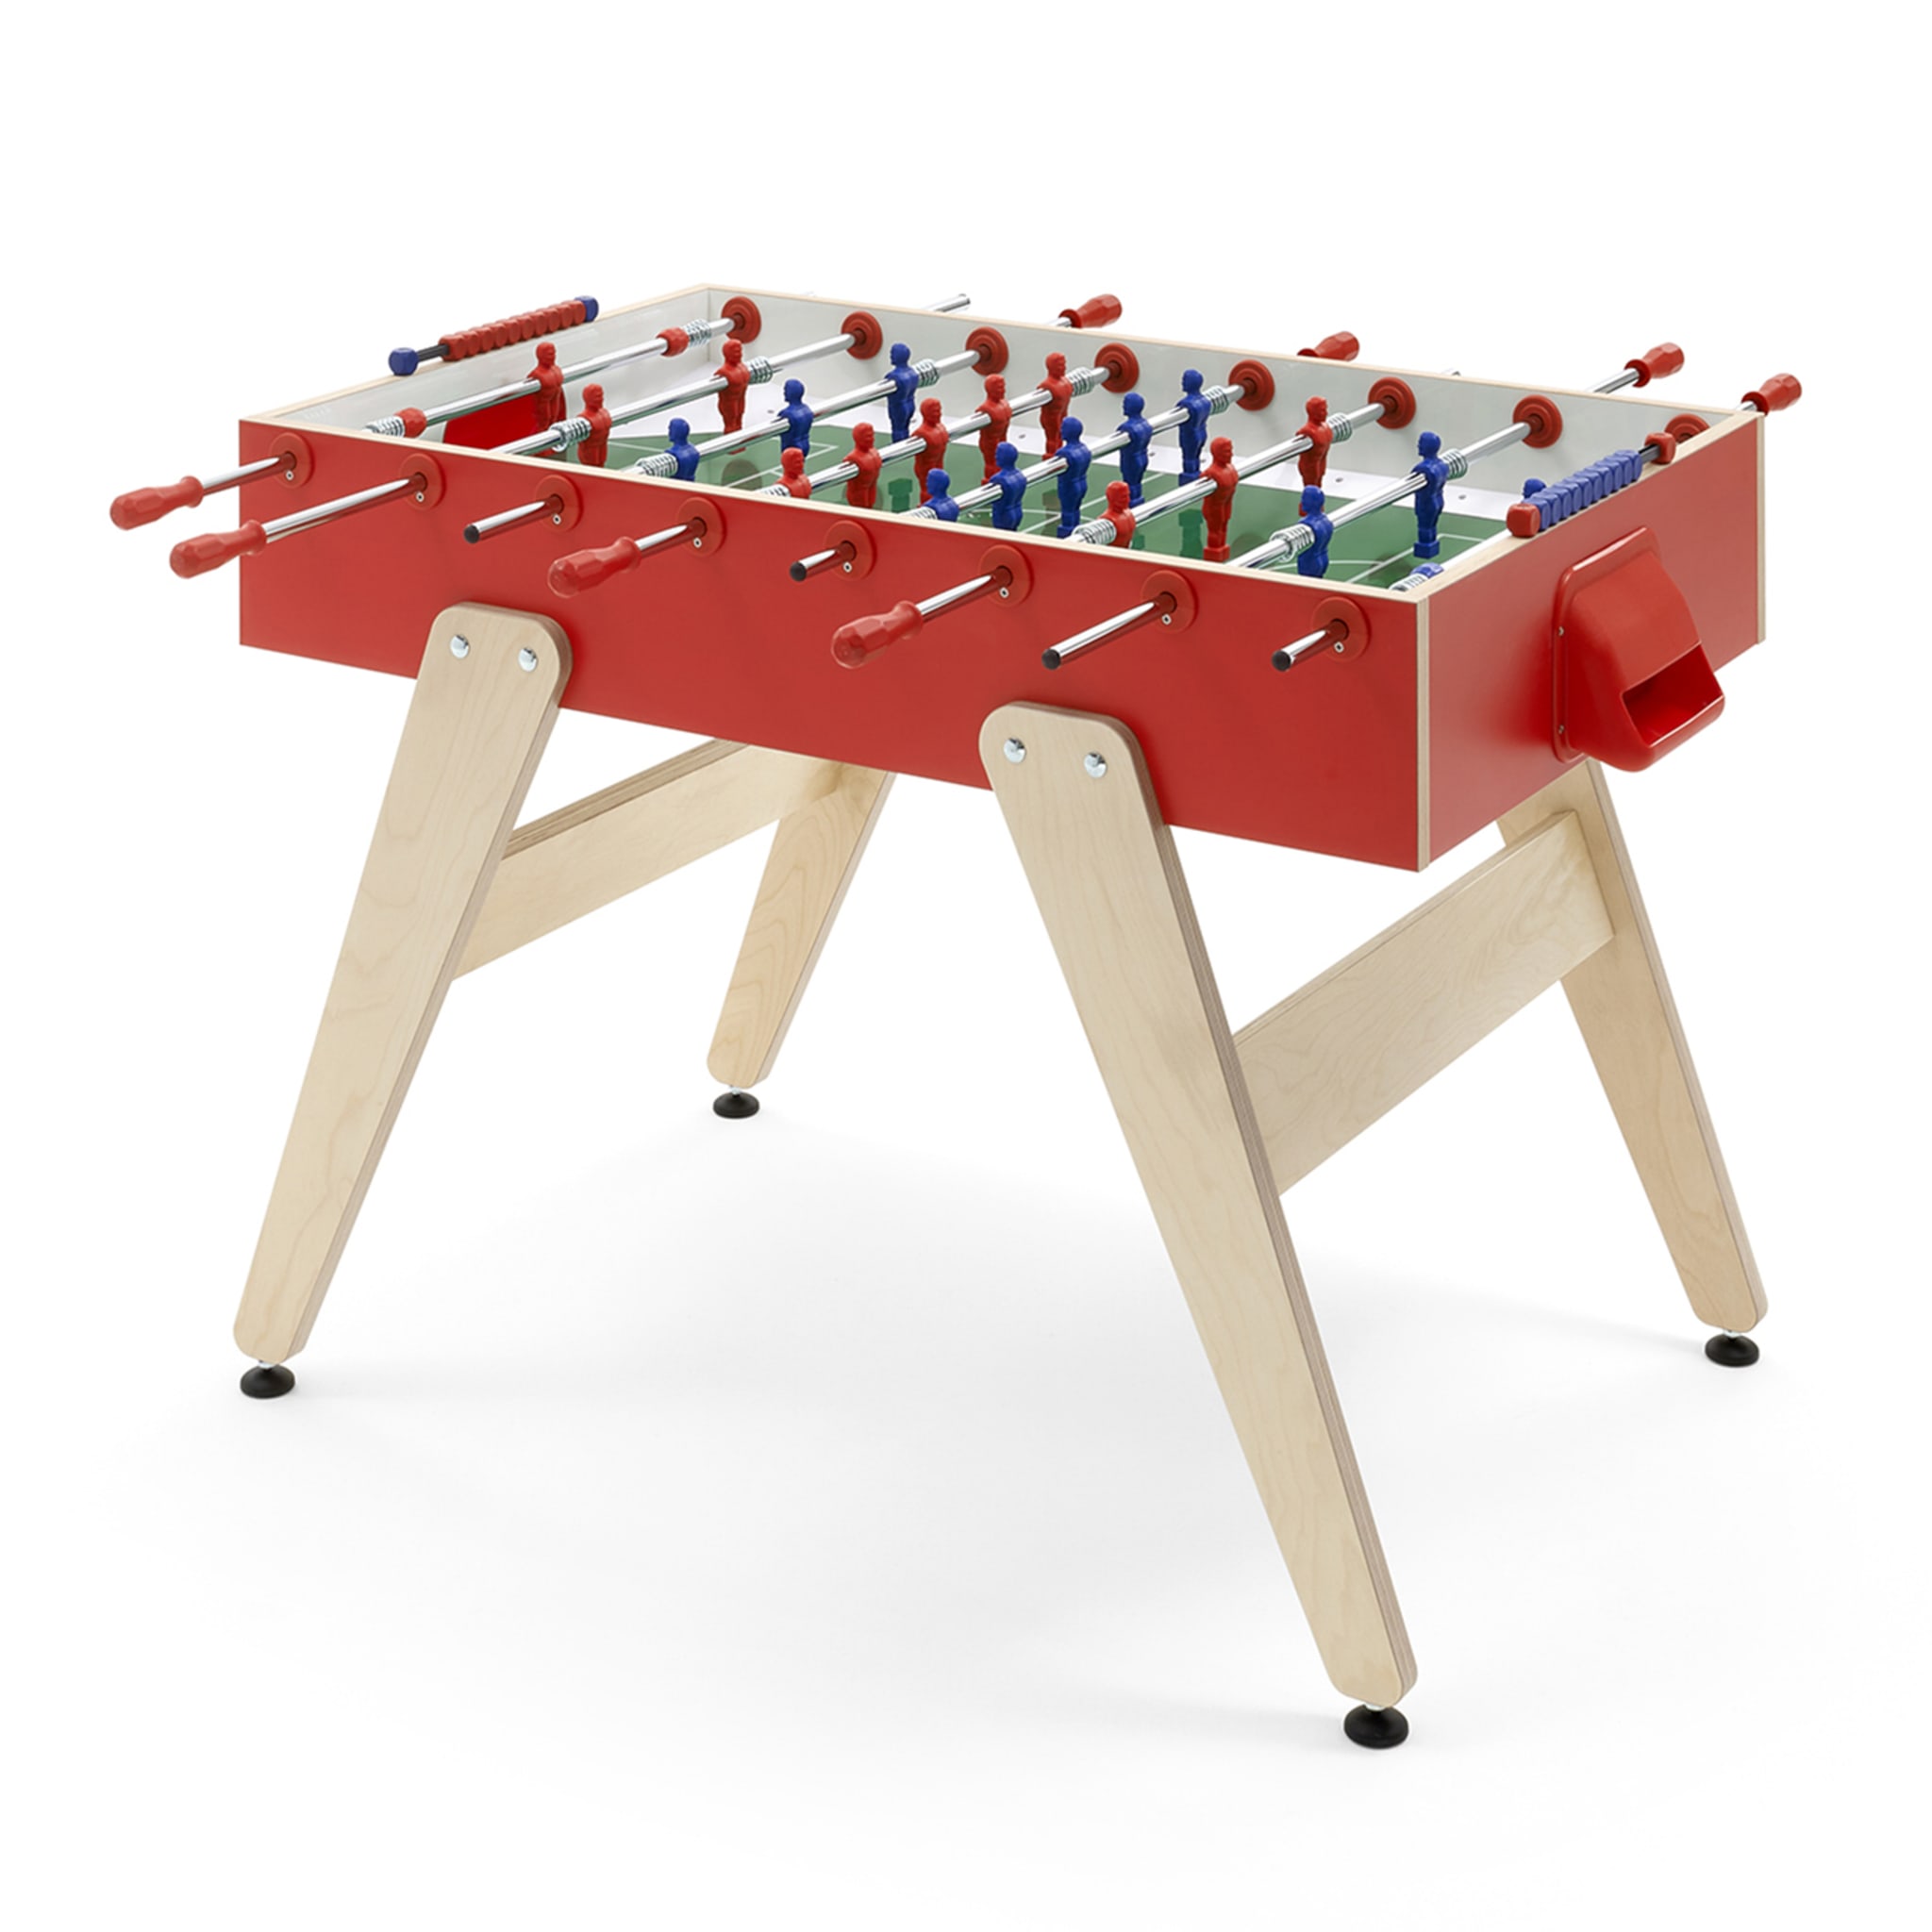 Cross Outdoor Red Foosball Table by Basaglia + Rota Nodari - Alternative view 1